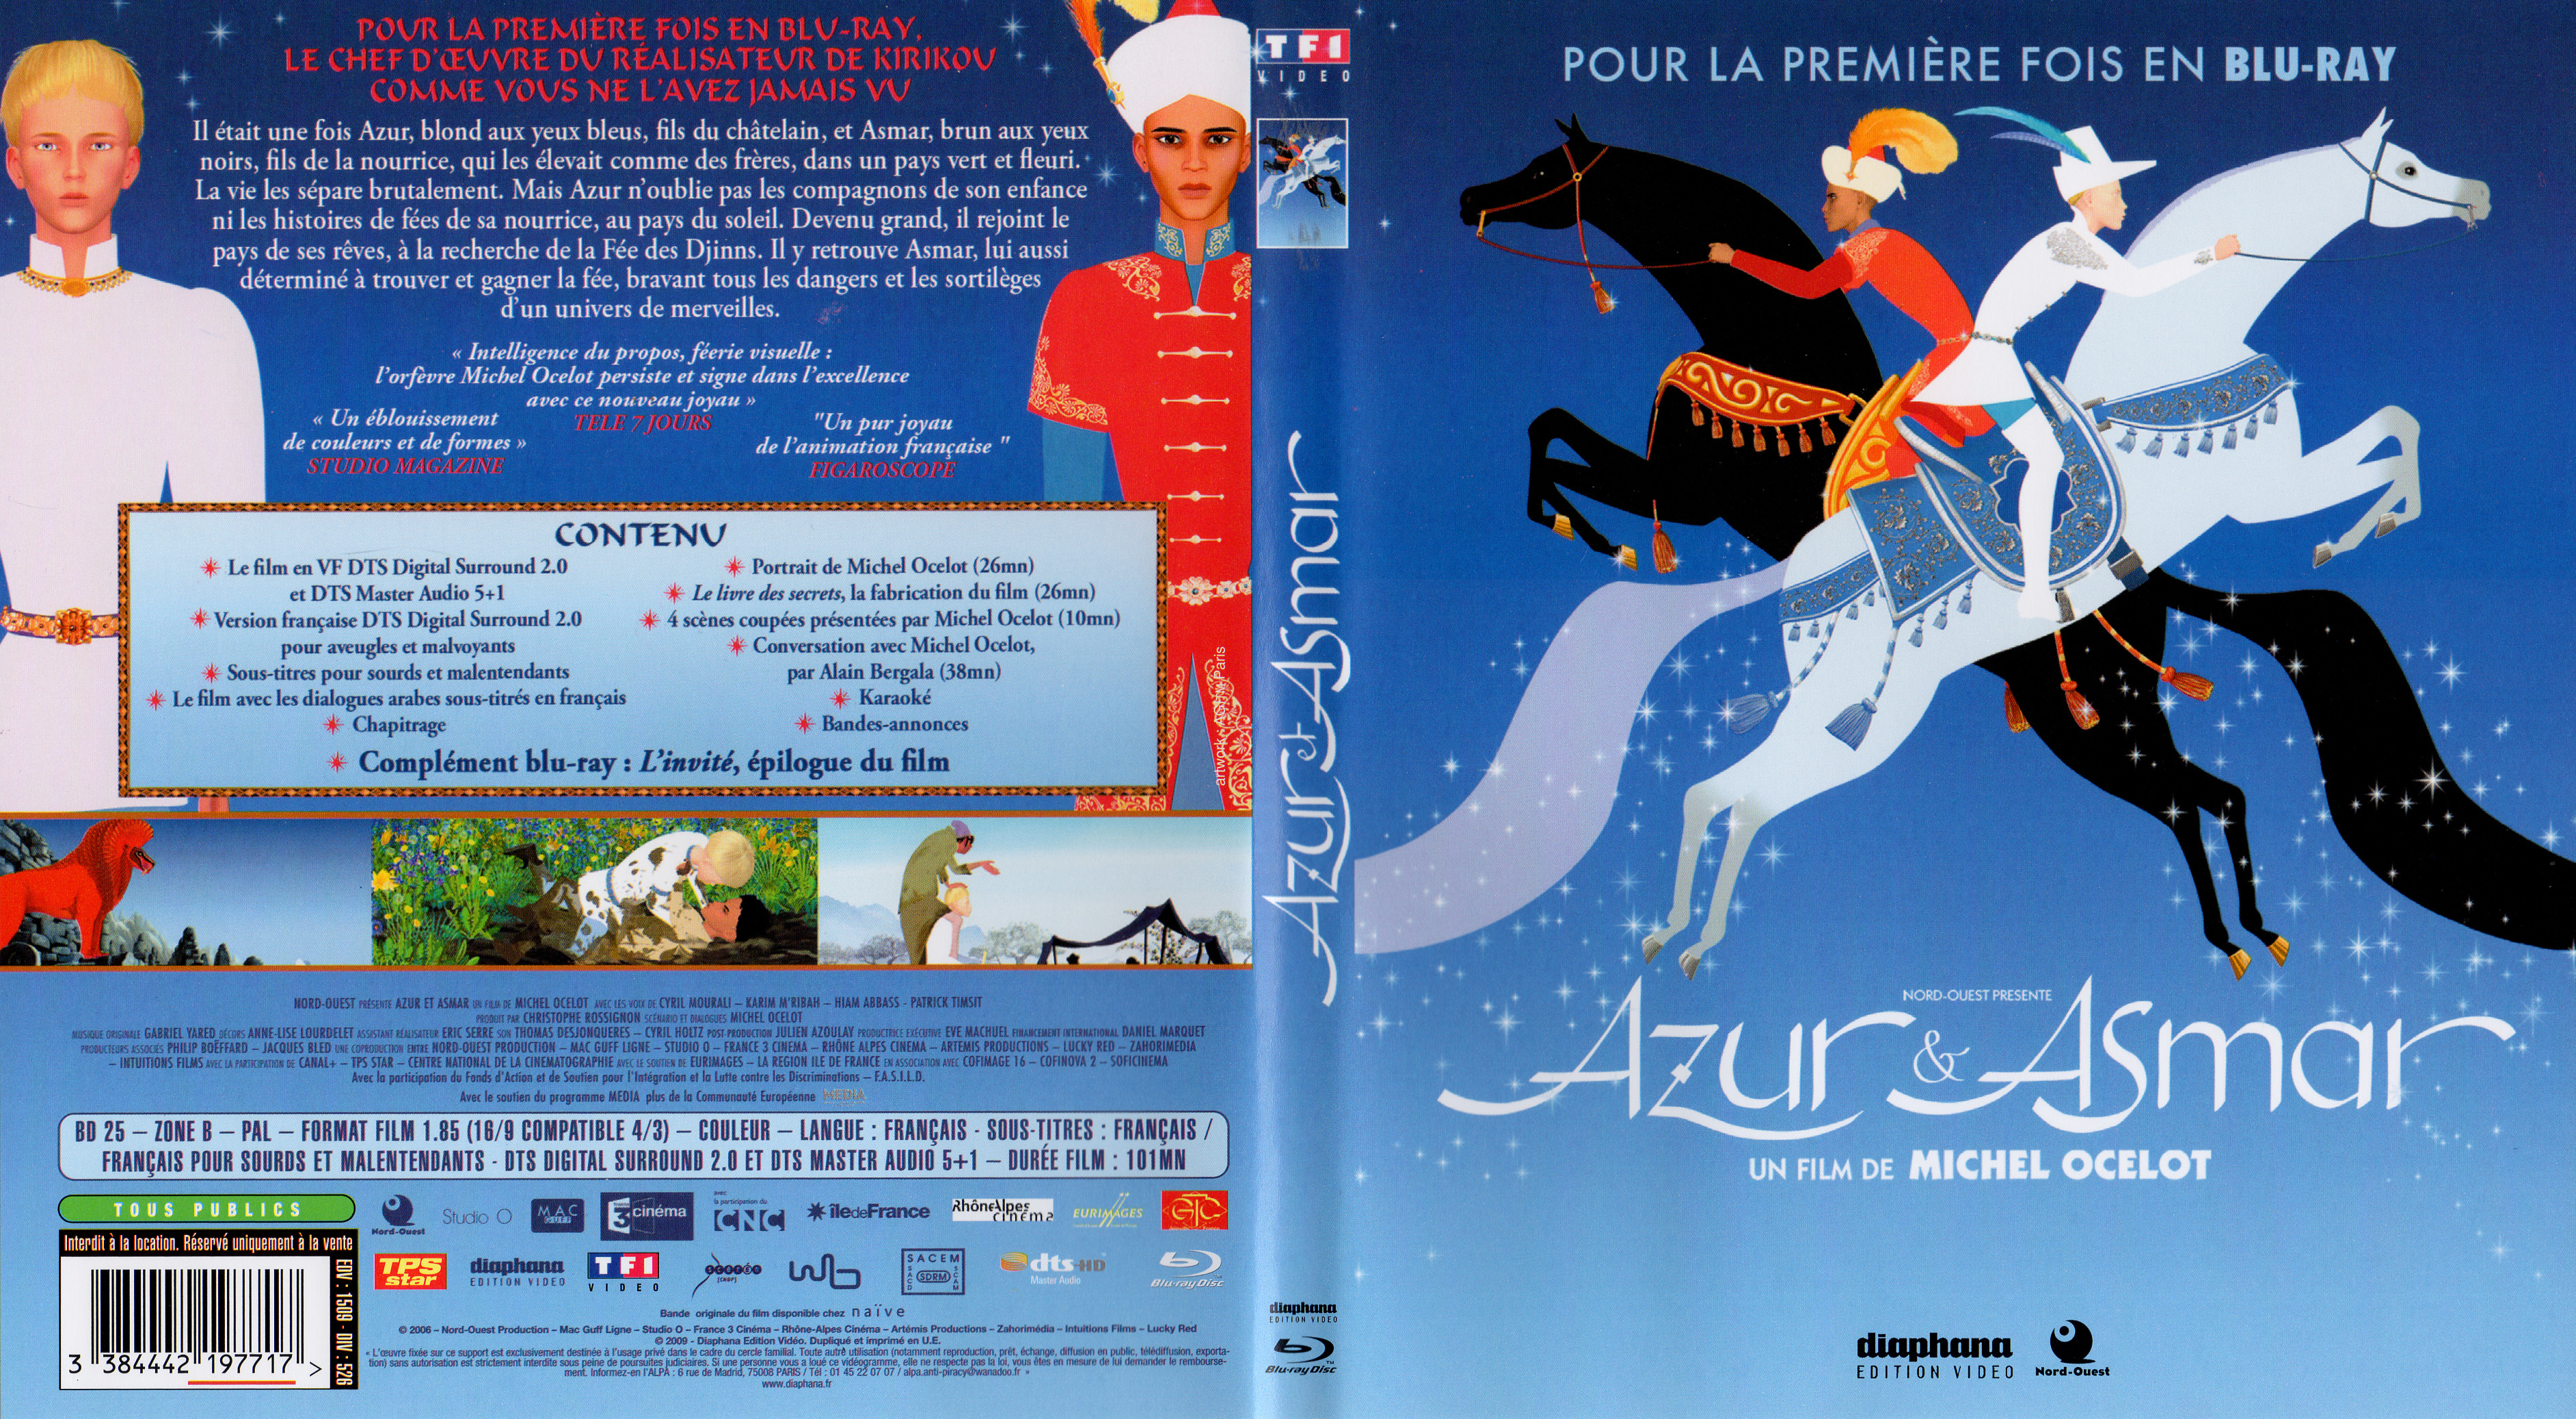 Jaquette DVD Azur et Asmar (BLU-RAY)